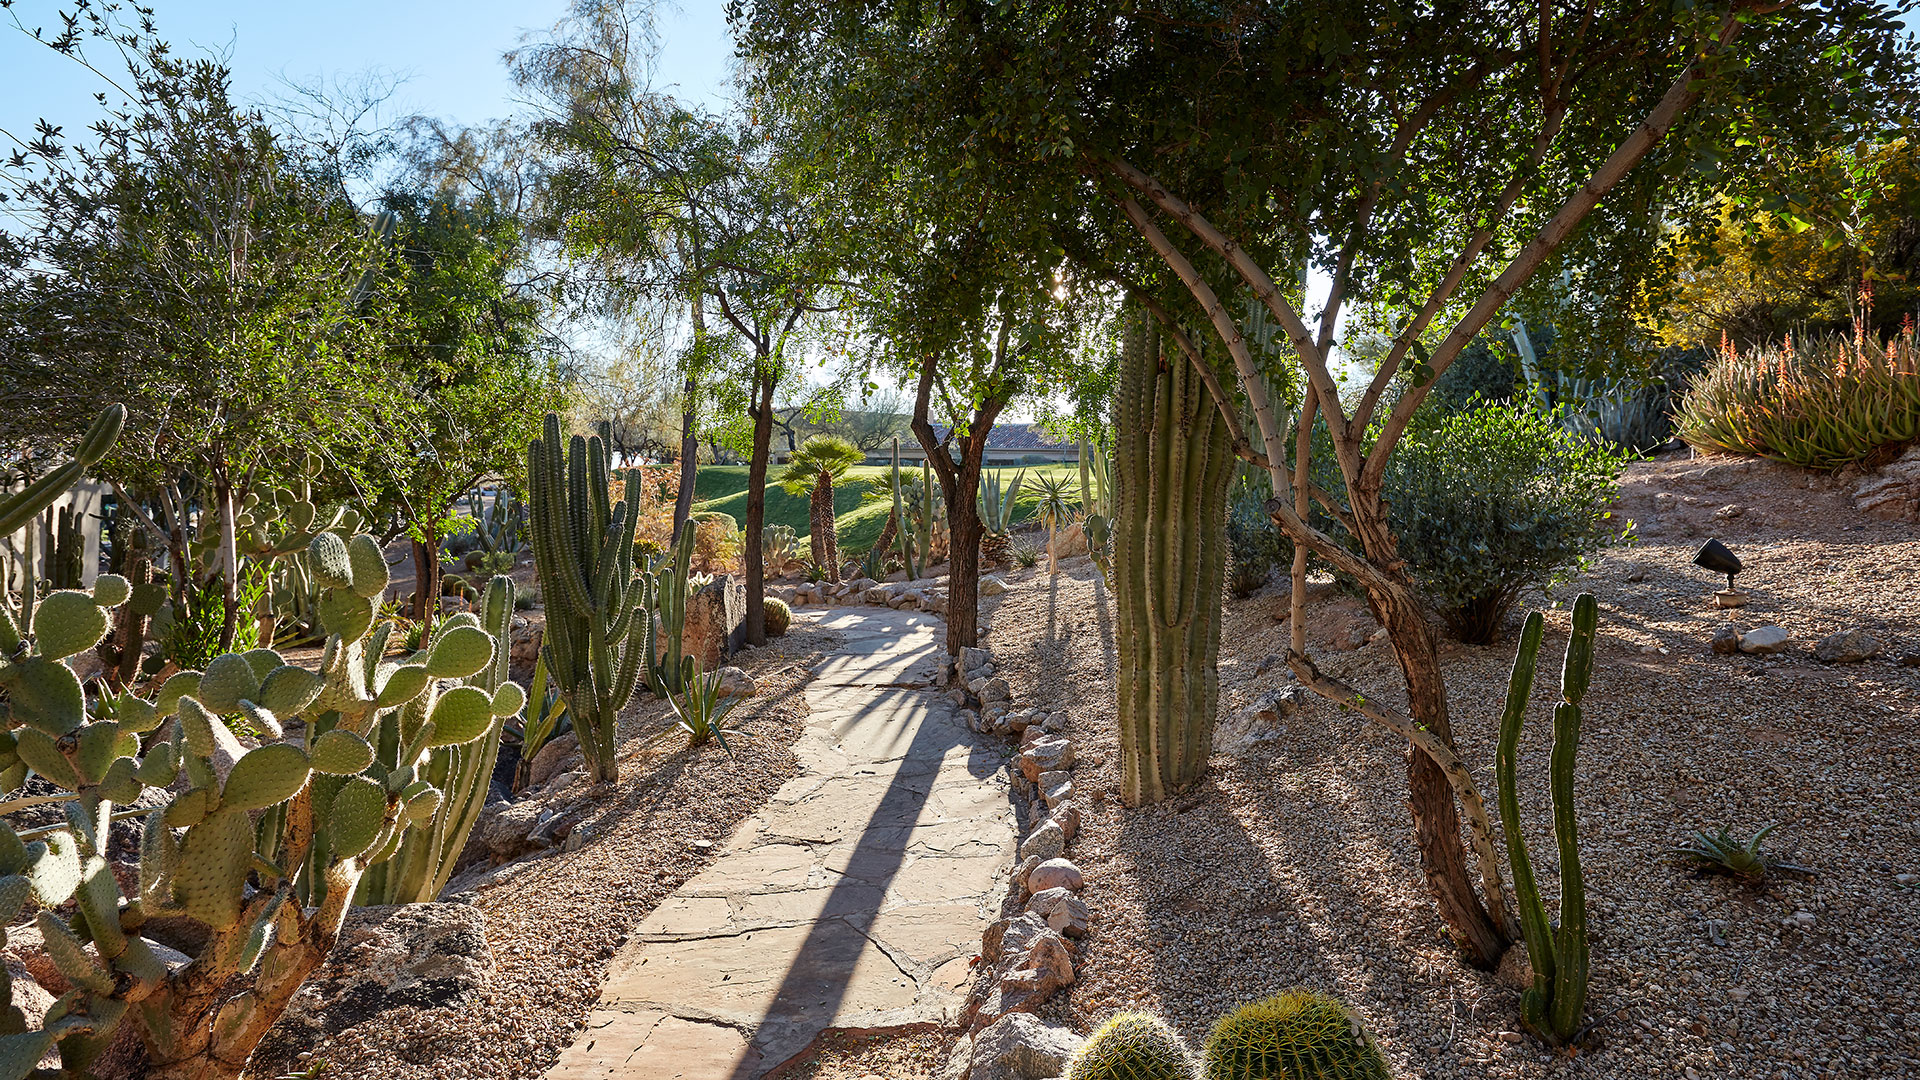 Patios overlook the Cactus Garden and provide views of Camelback Mountain's flora and fauna.